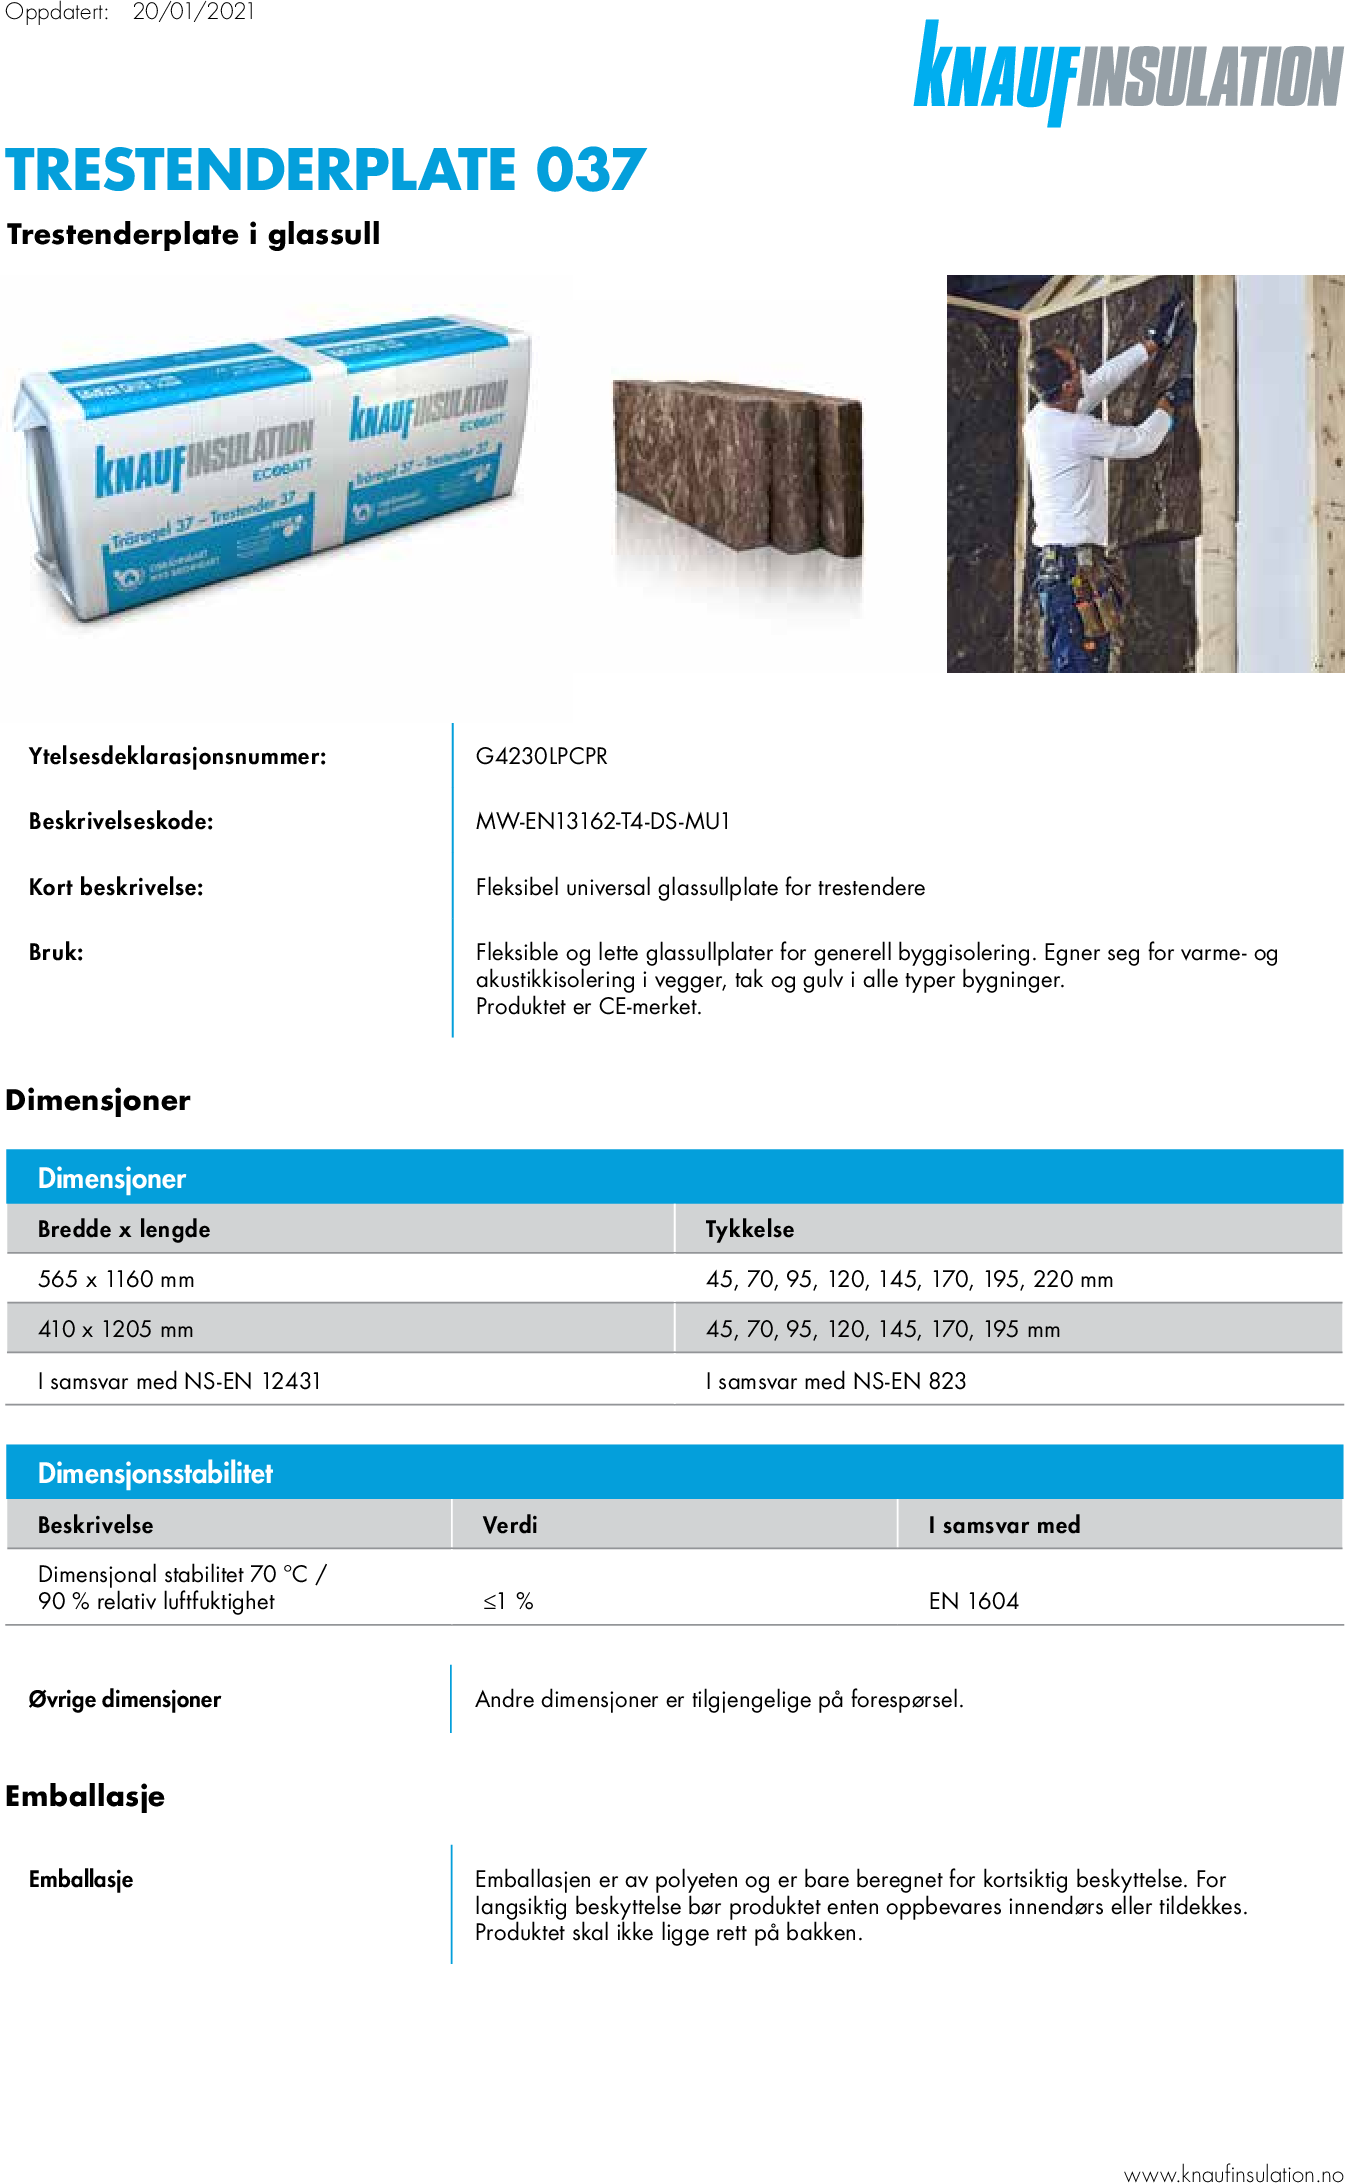 Knauf Insulation Trestenderplate 037 - Datasheet